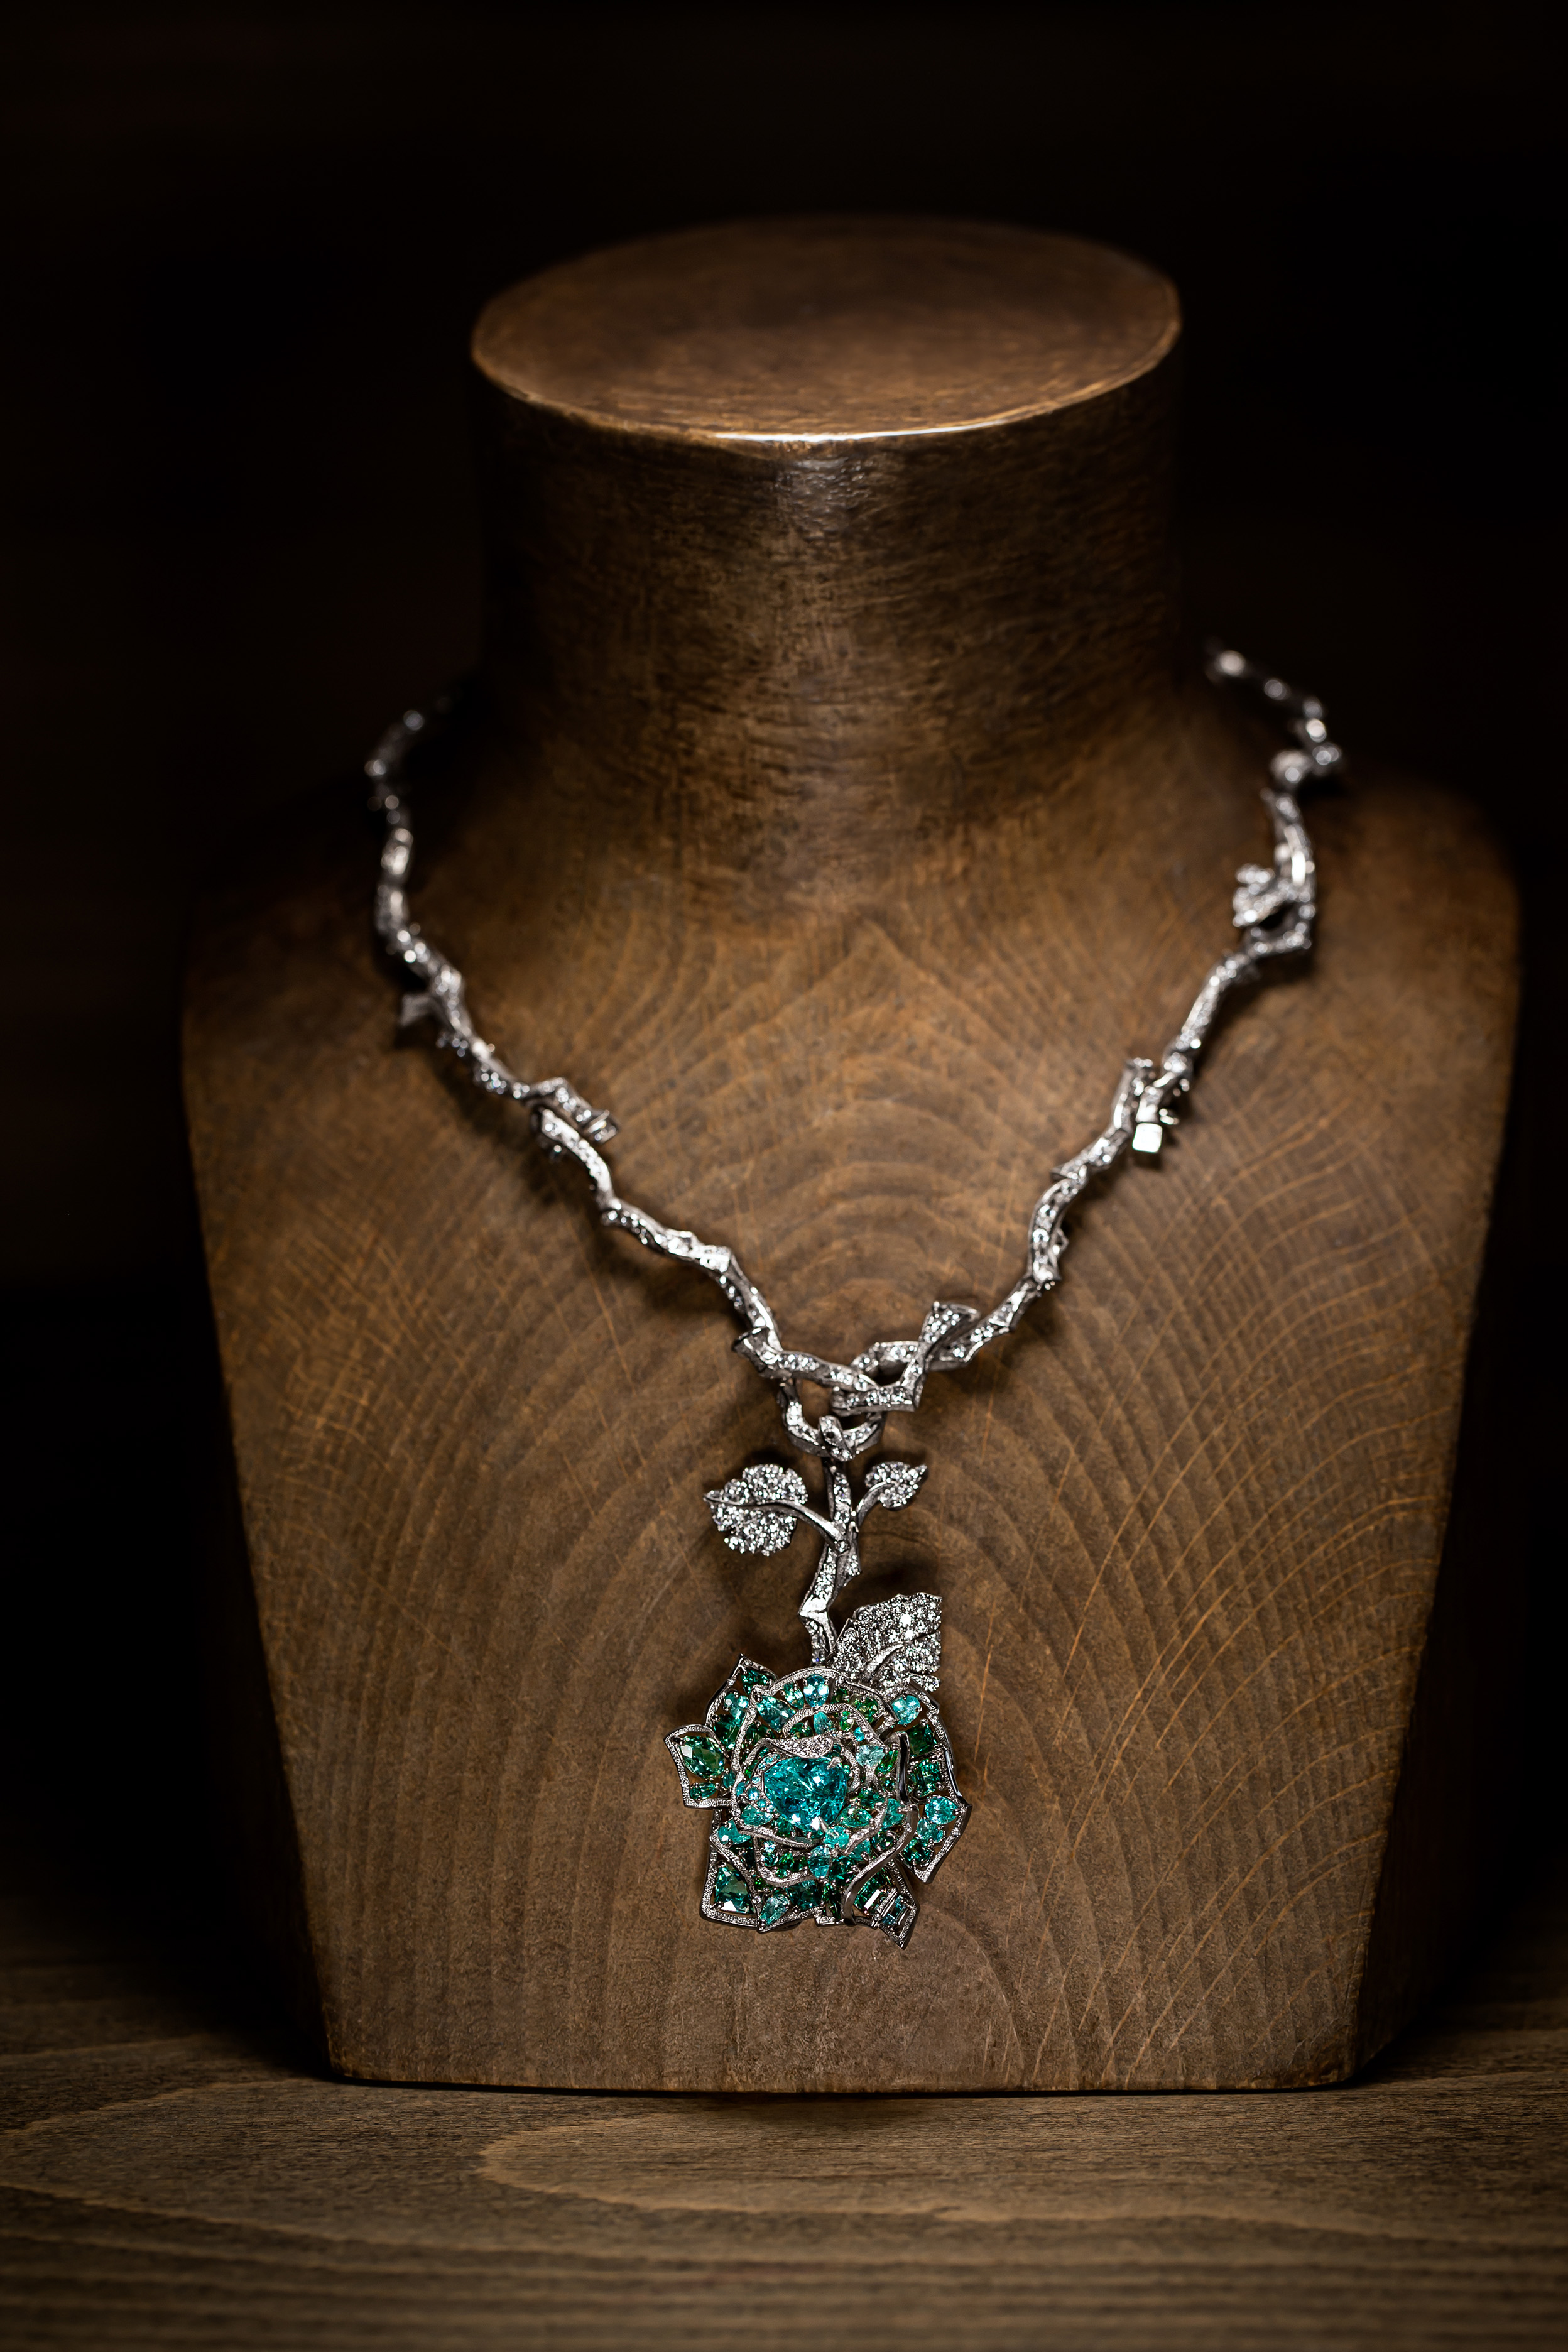 مجوهرات راقية ضمن مجموعة روزديور RoseDior لدار ديور Dior